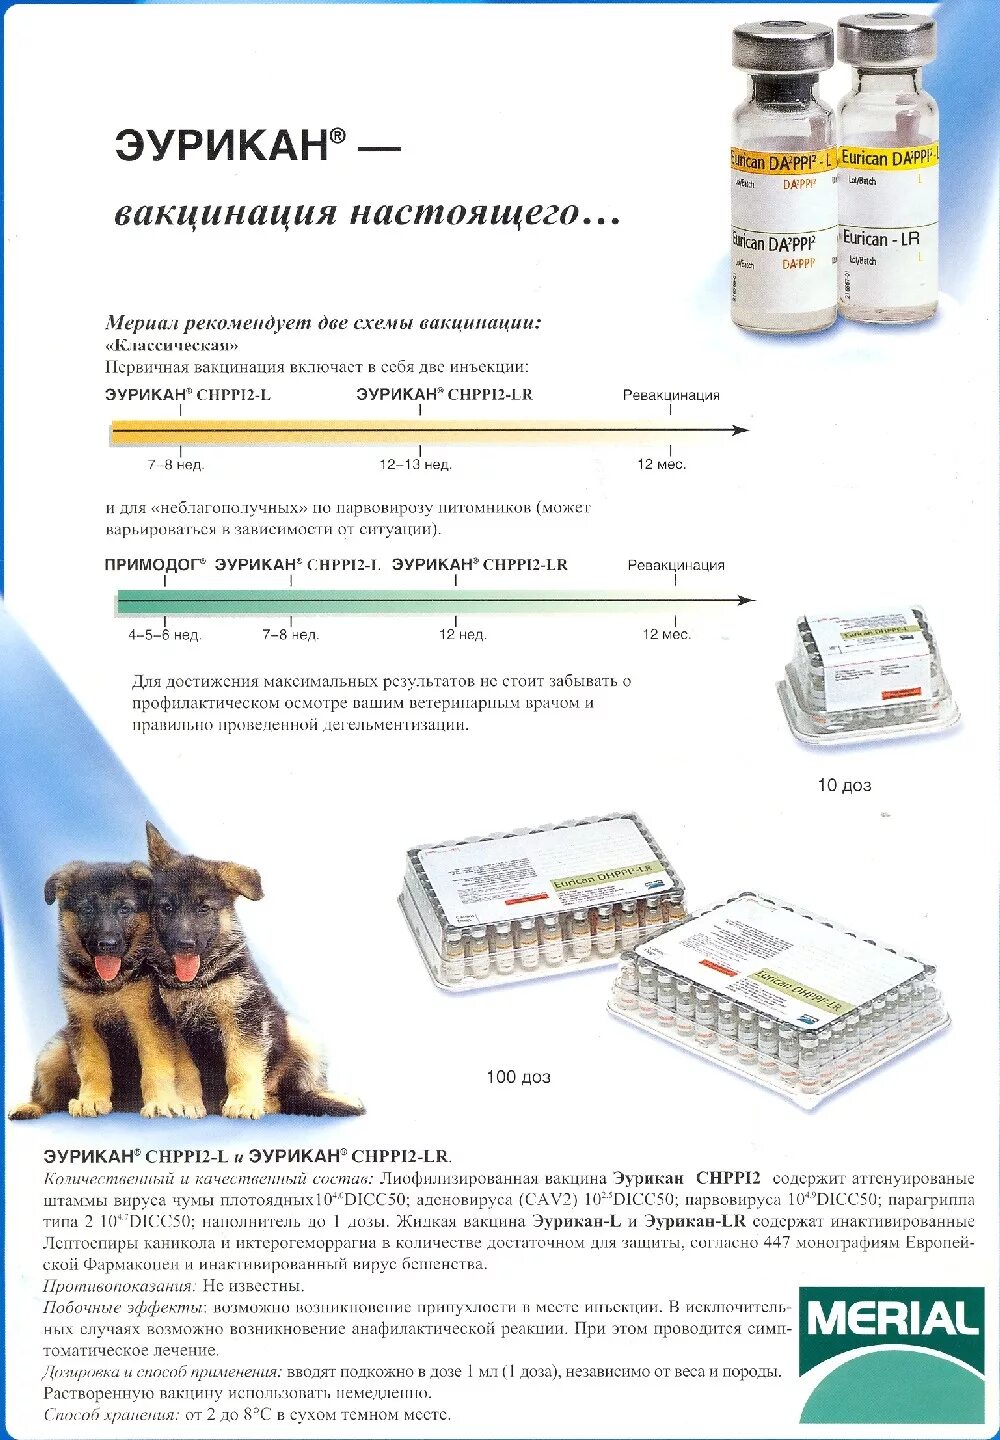 Вакцина для прививки собак. Эурикан dhppi2 l схема вакцинации. Схема вакцинации эуриканом собак. Схема вакцинации Эурикан для собак. Эурикан схема вакцинации щенков.